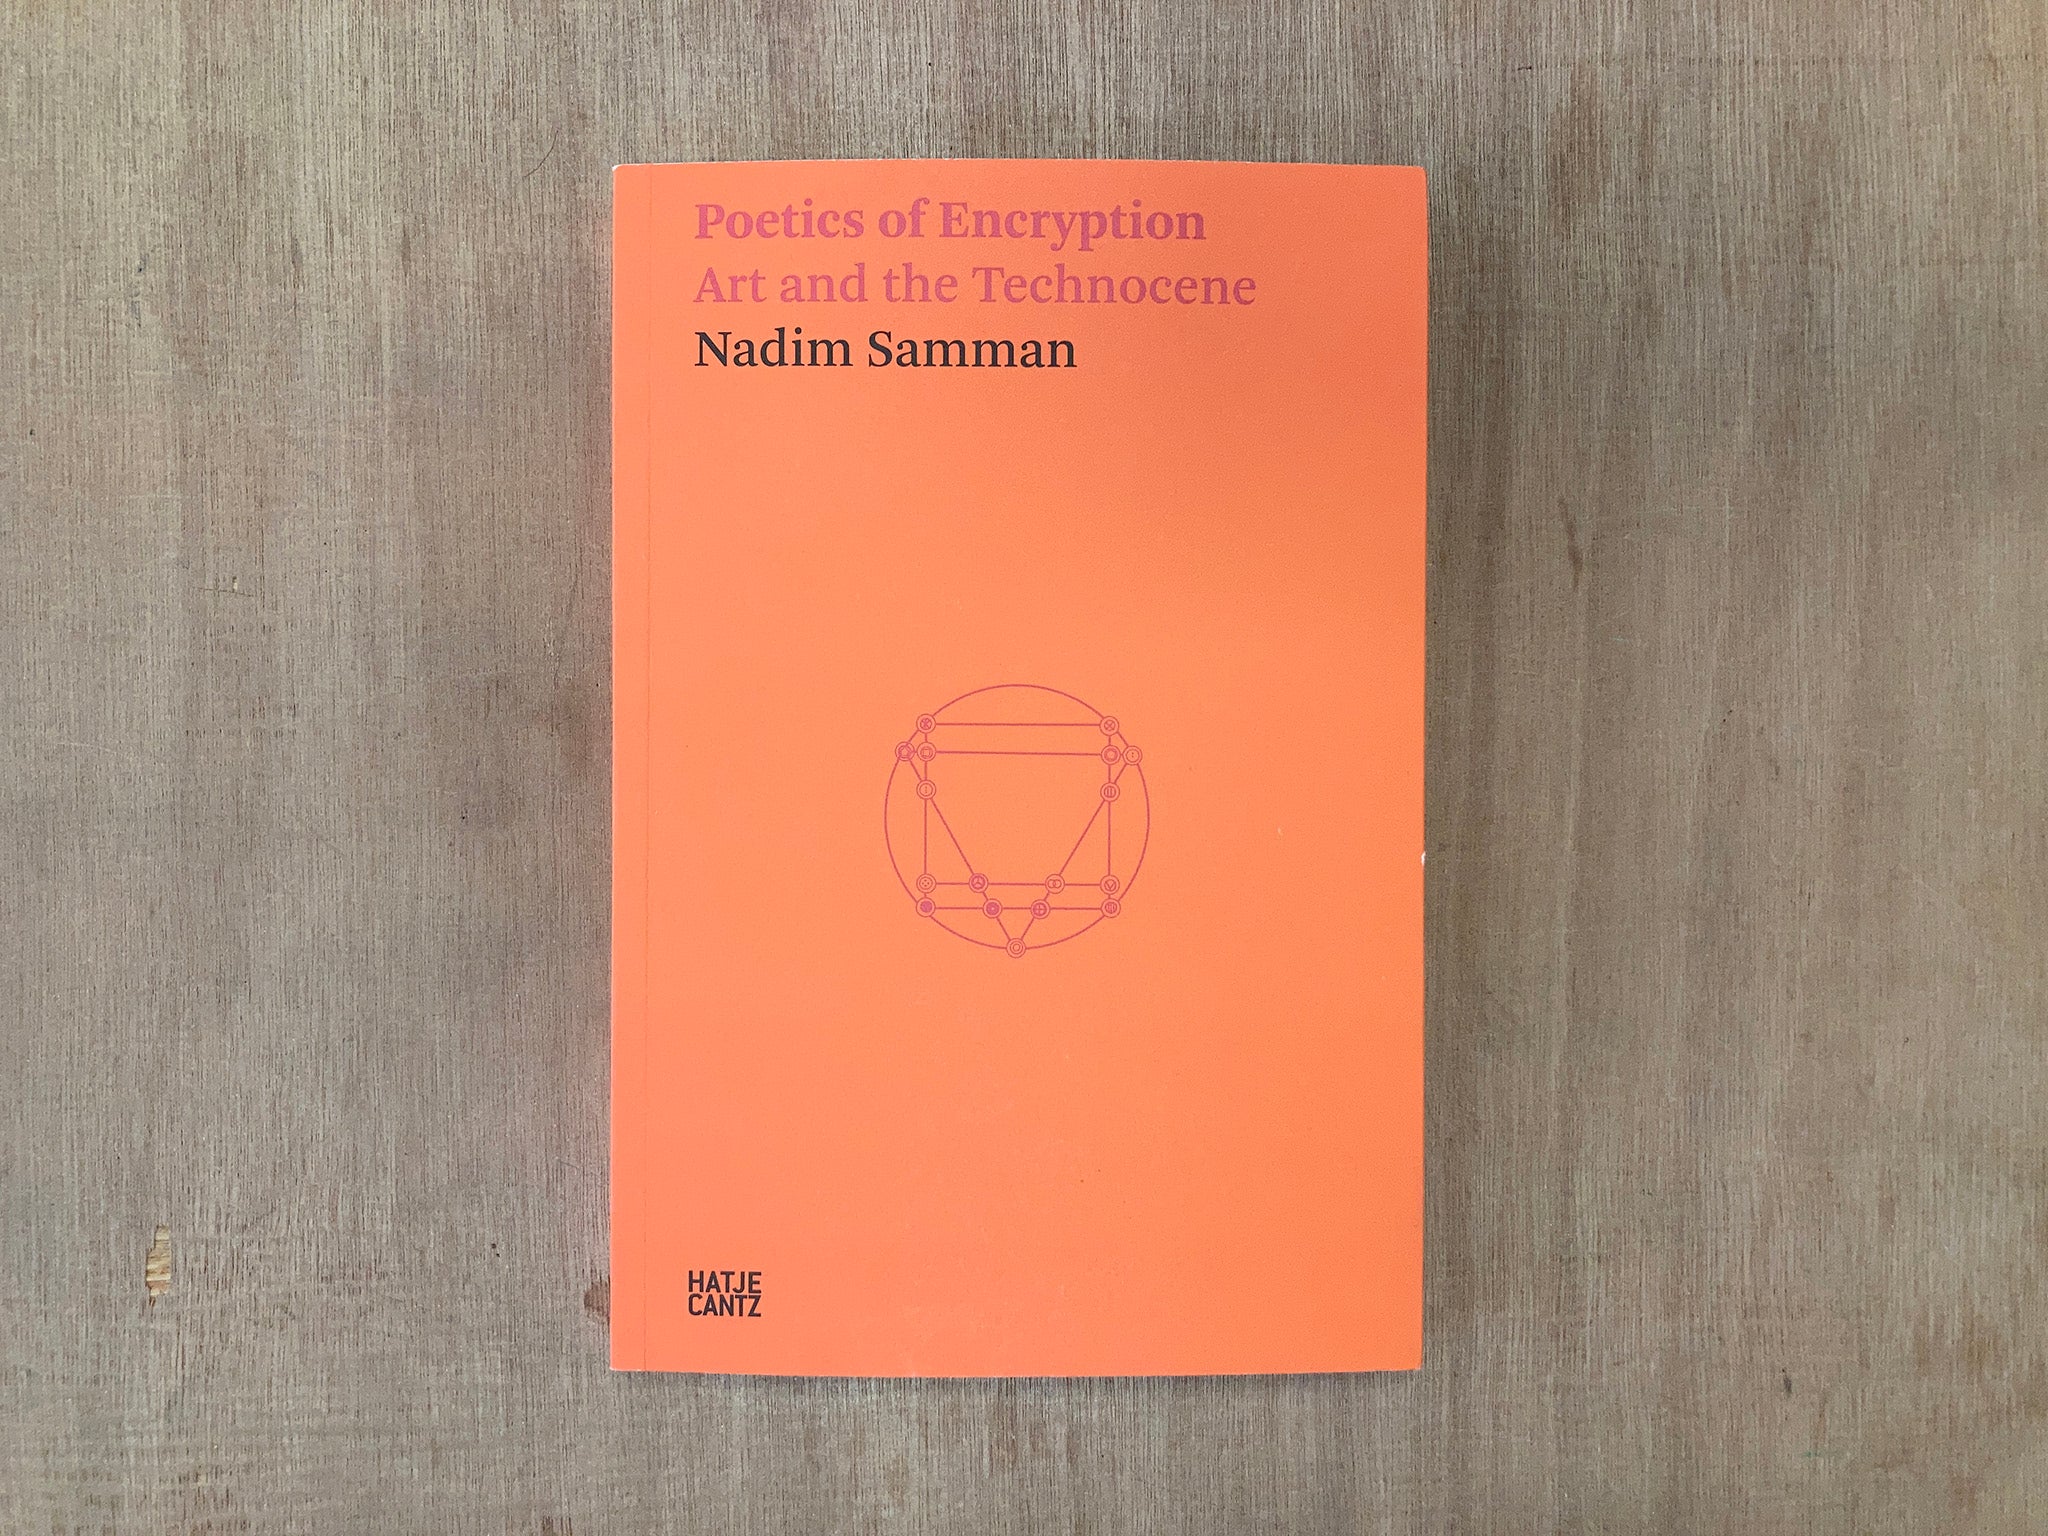 POETICS OF ENCRYPTION: ART AND THE TECHNOCENE by Nadim Samman